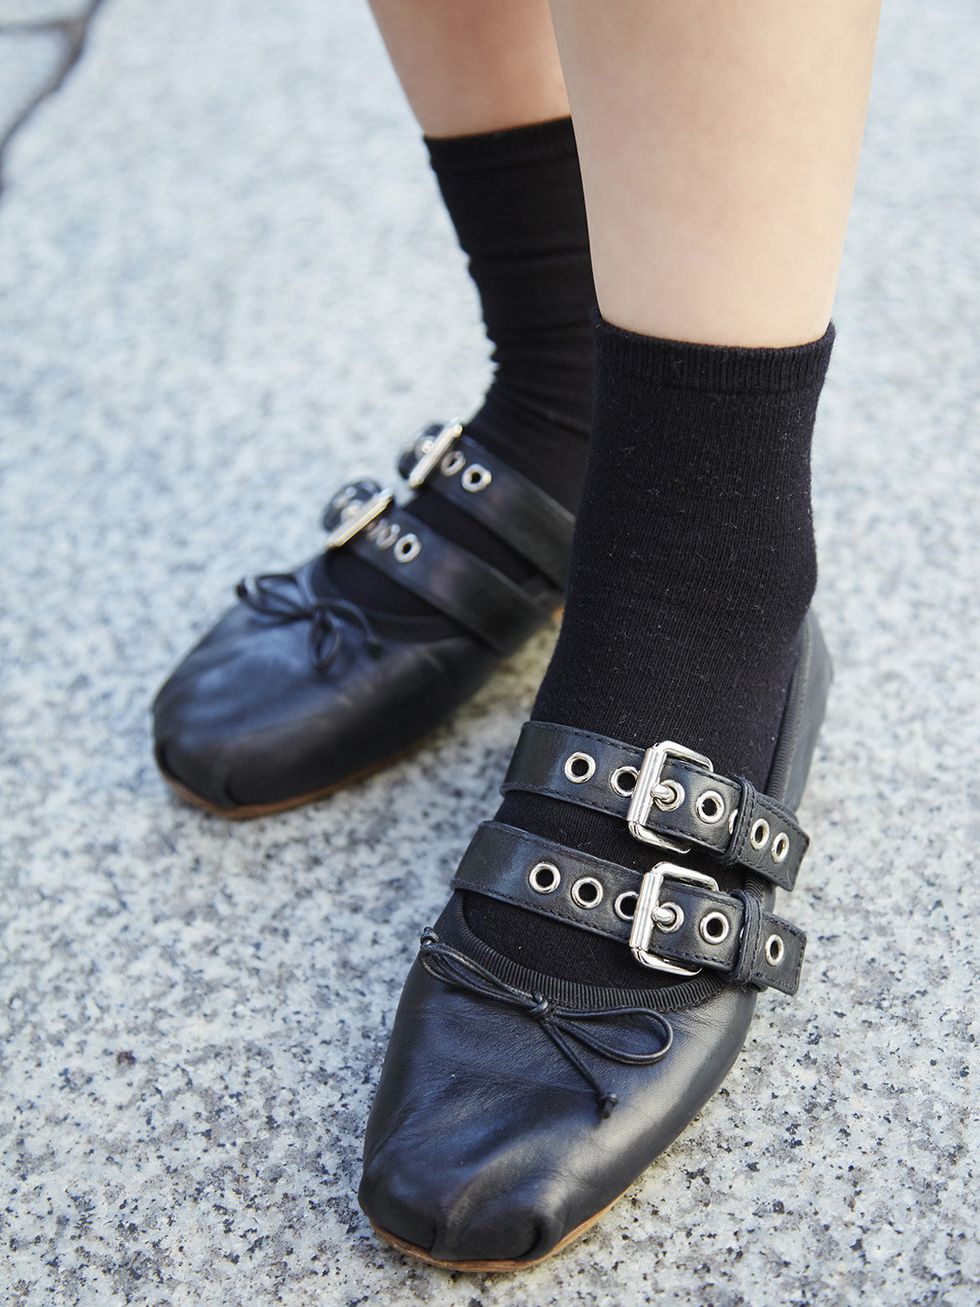 Human leg, Joint, Style, Fashion, Black, Close-up, Sock, Leather, Fashion design, Silver, 